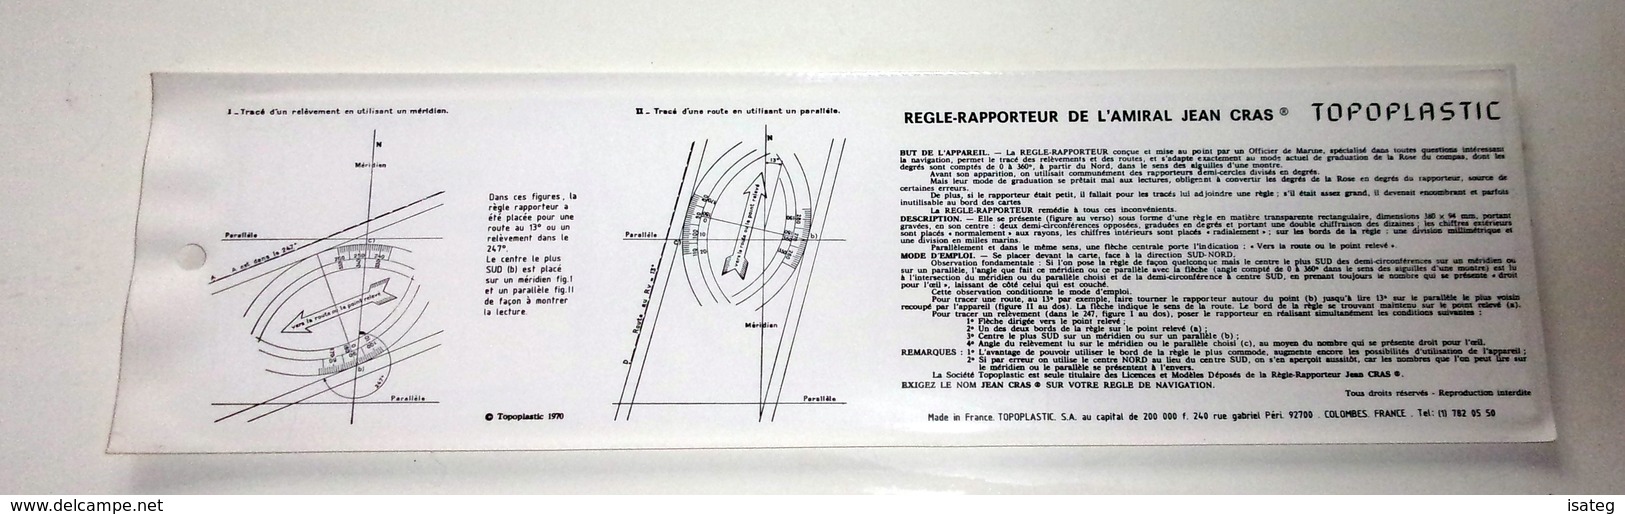 Régle-Rapporteur Amiral Jean Cras - Aviation/Marine -1970 - - Other Book Accessories